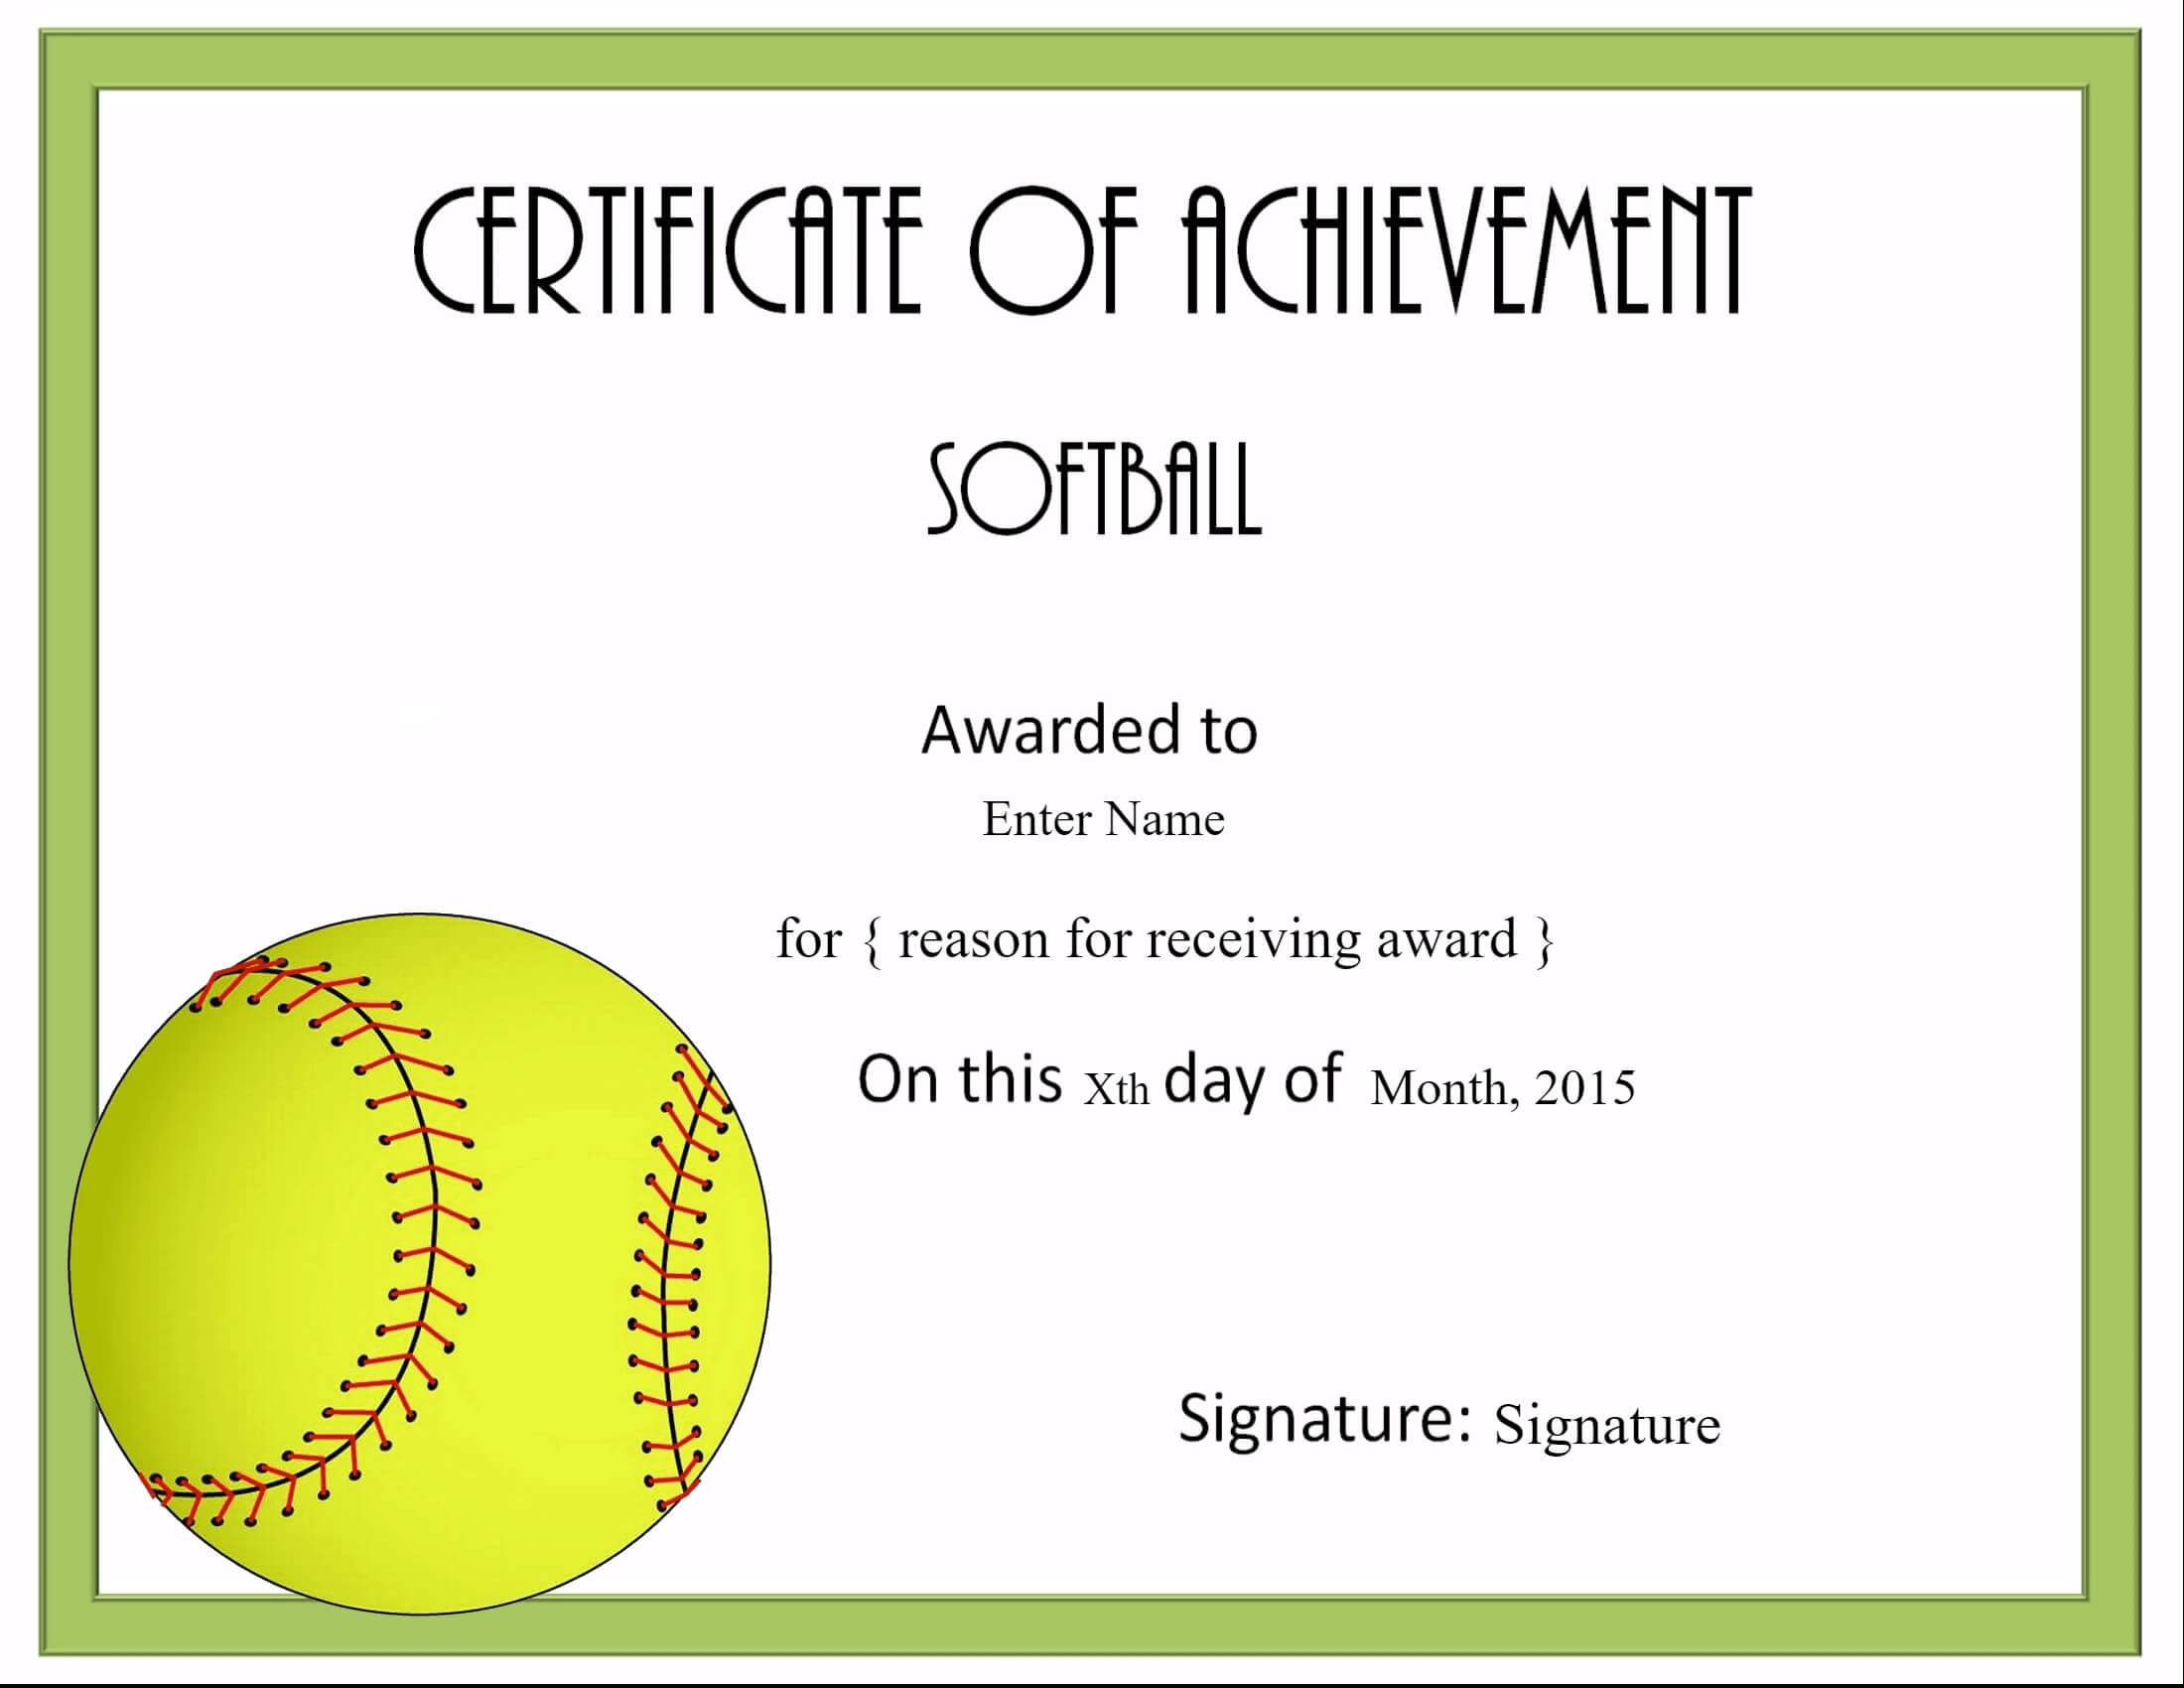 Free Softball Certificate Templates - Customize Online With Free Softball Certificate Templates